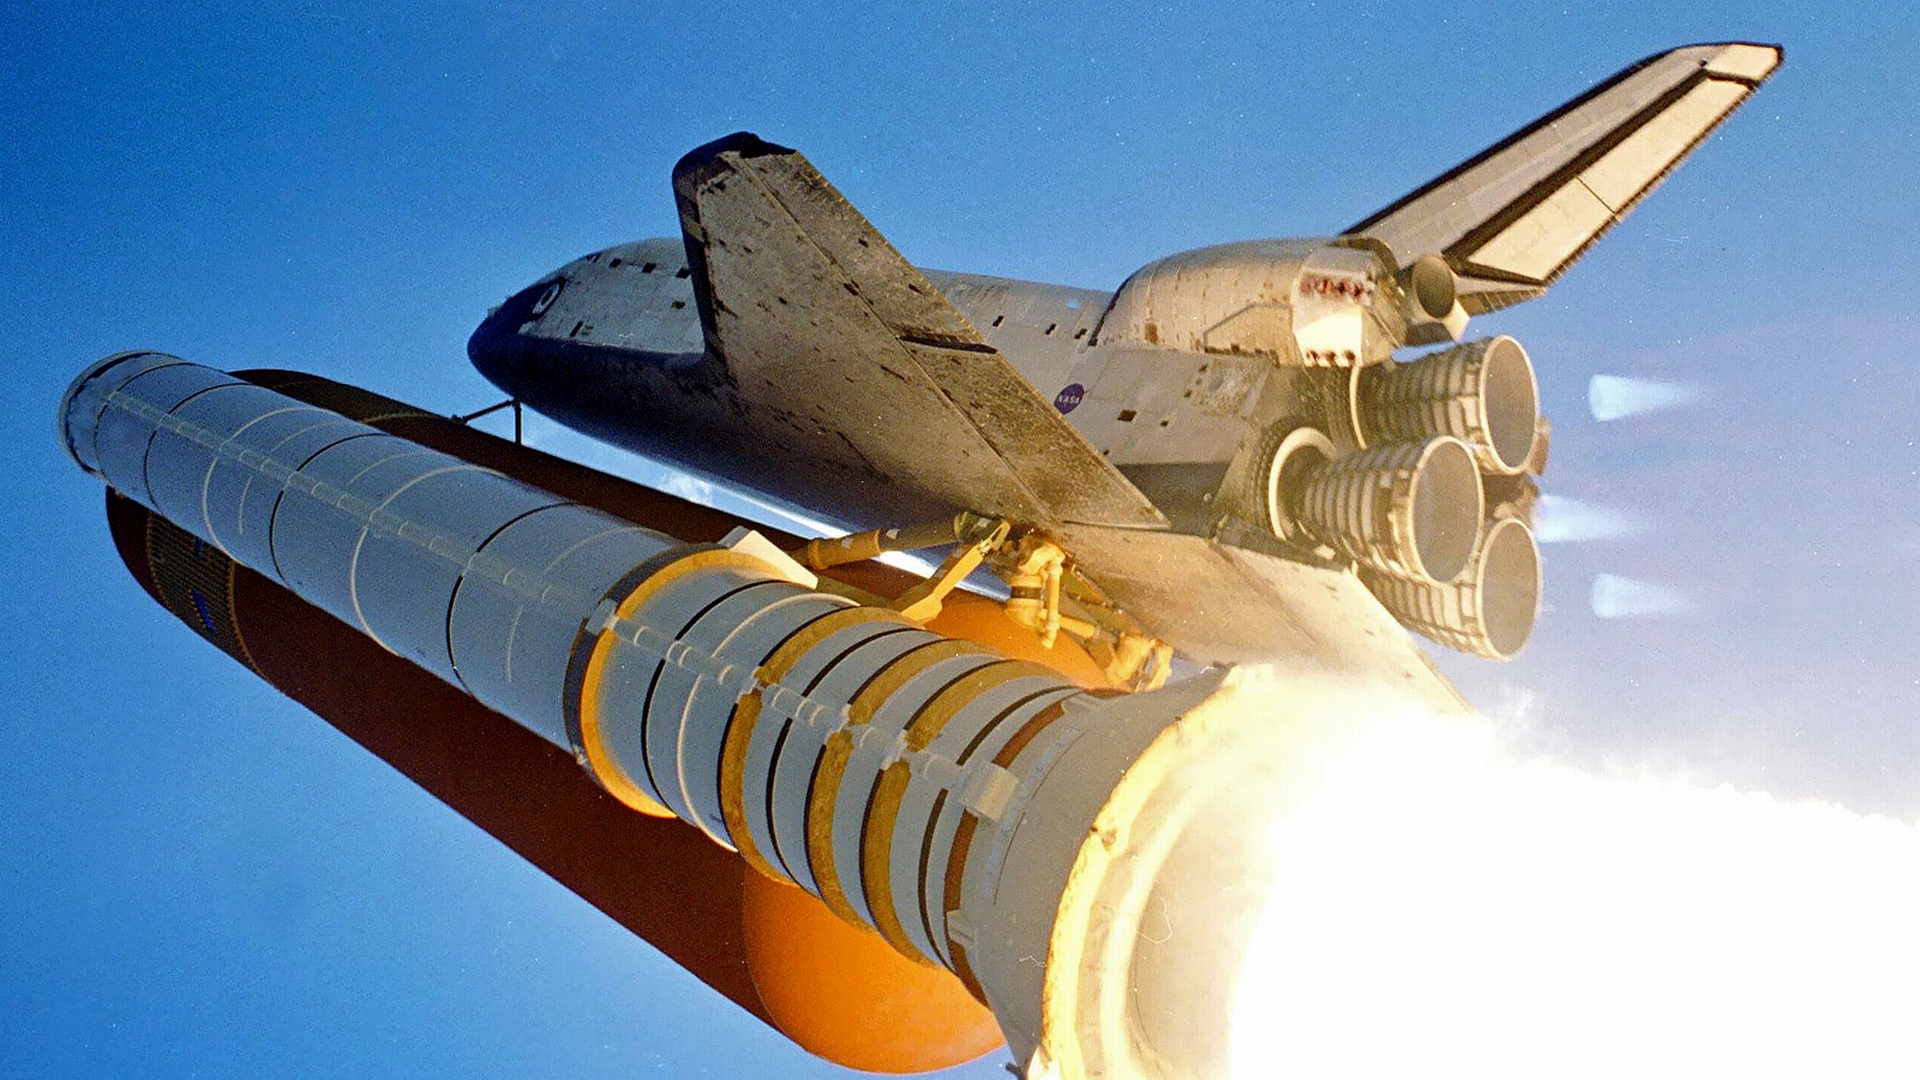 space shuttles, vehicles, space shuttle, nasa lift off